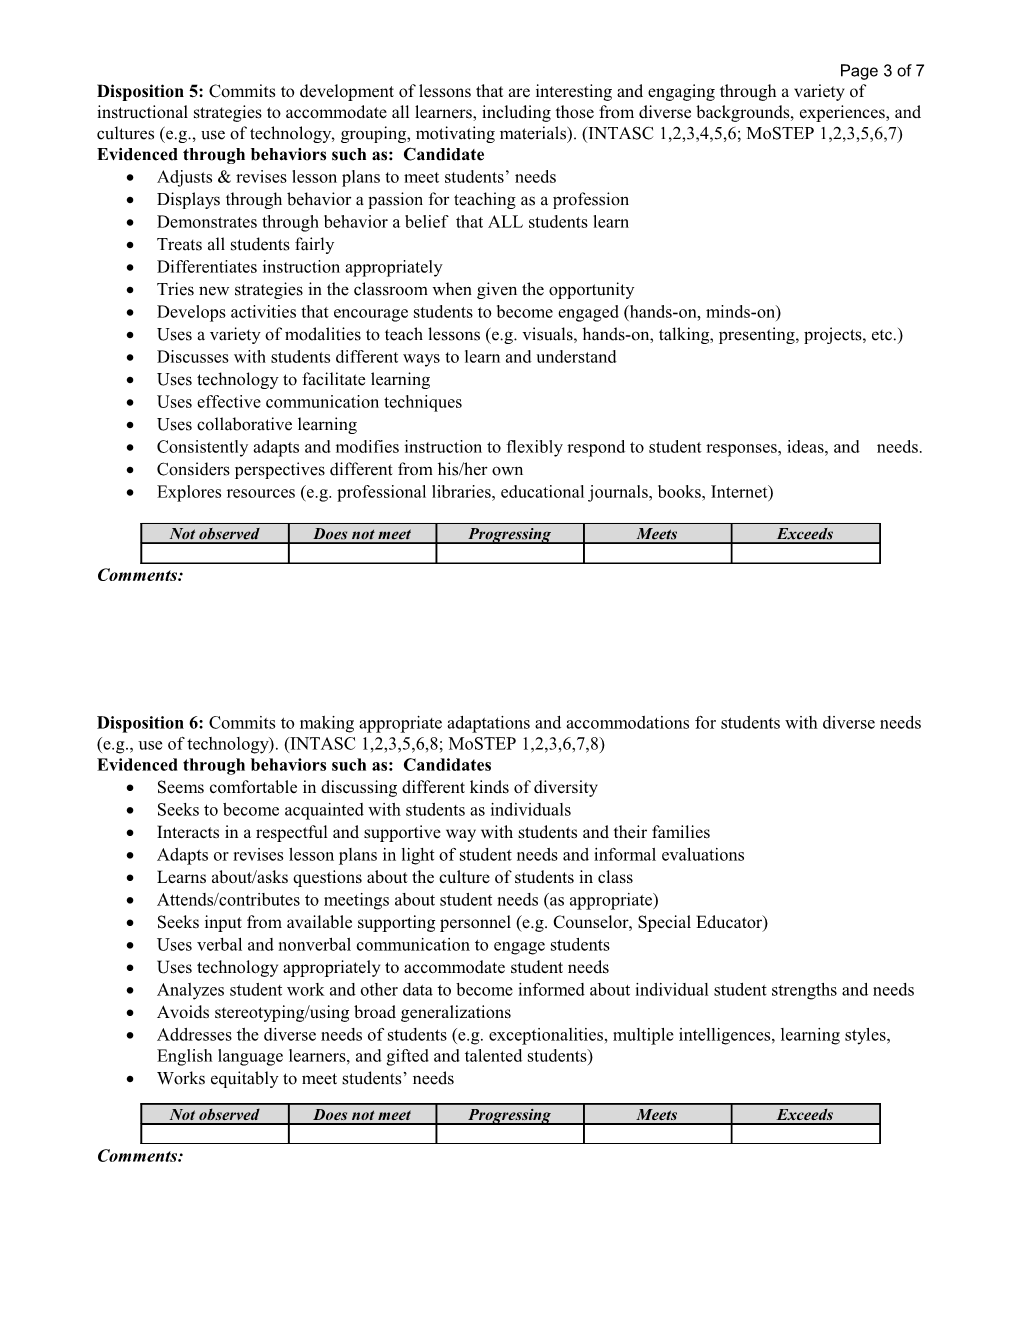 Teacher Candidate Dispositions Assessment Form